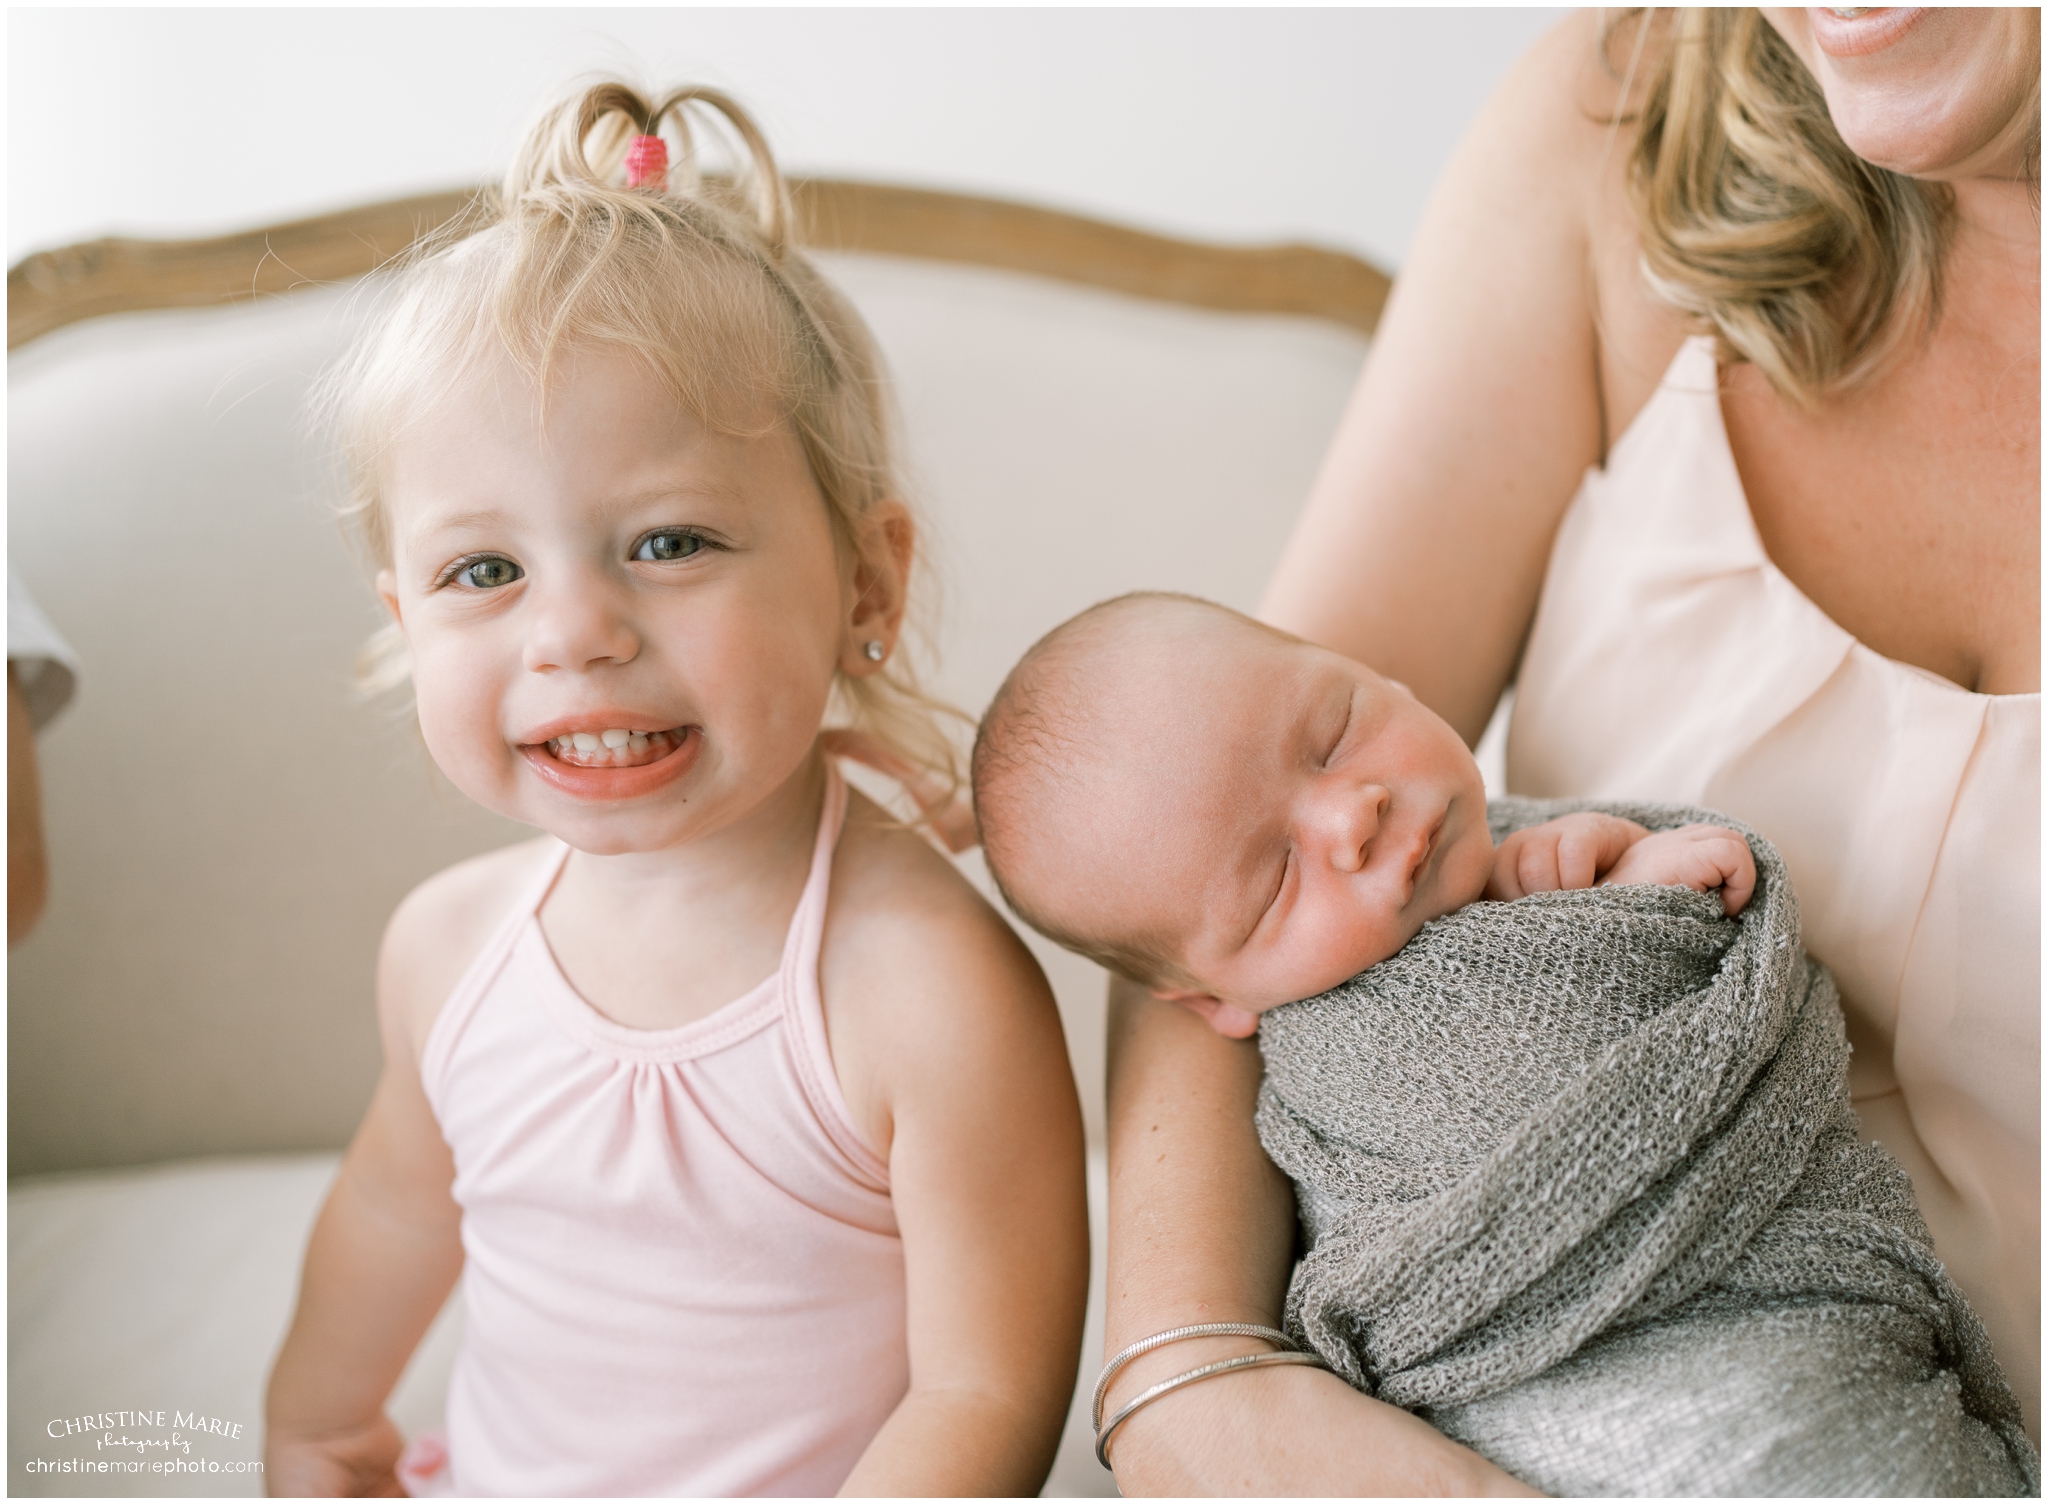 cumming newborn photography in studio with siblings